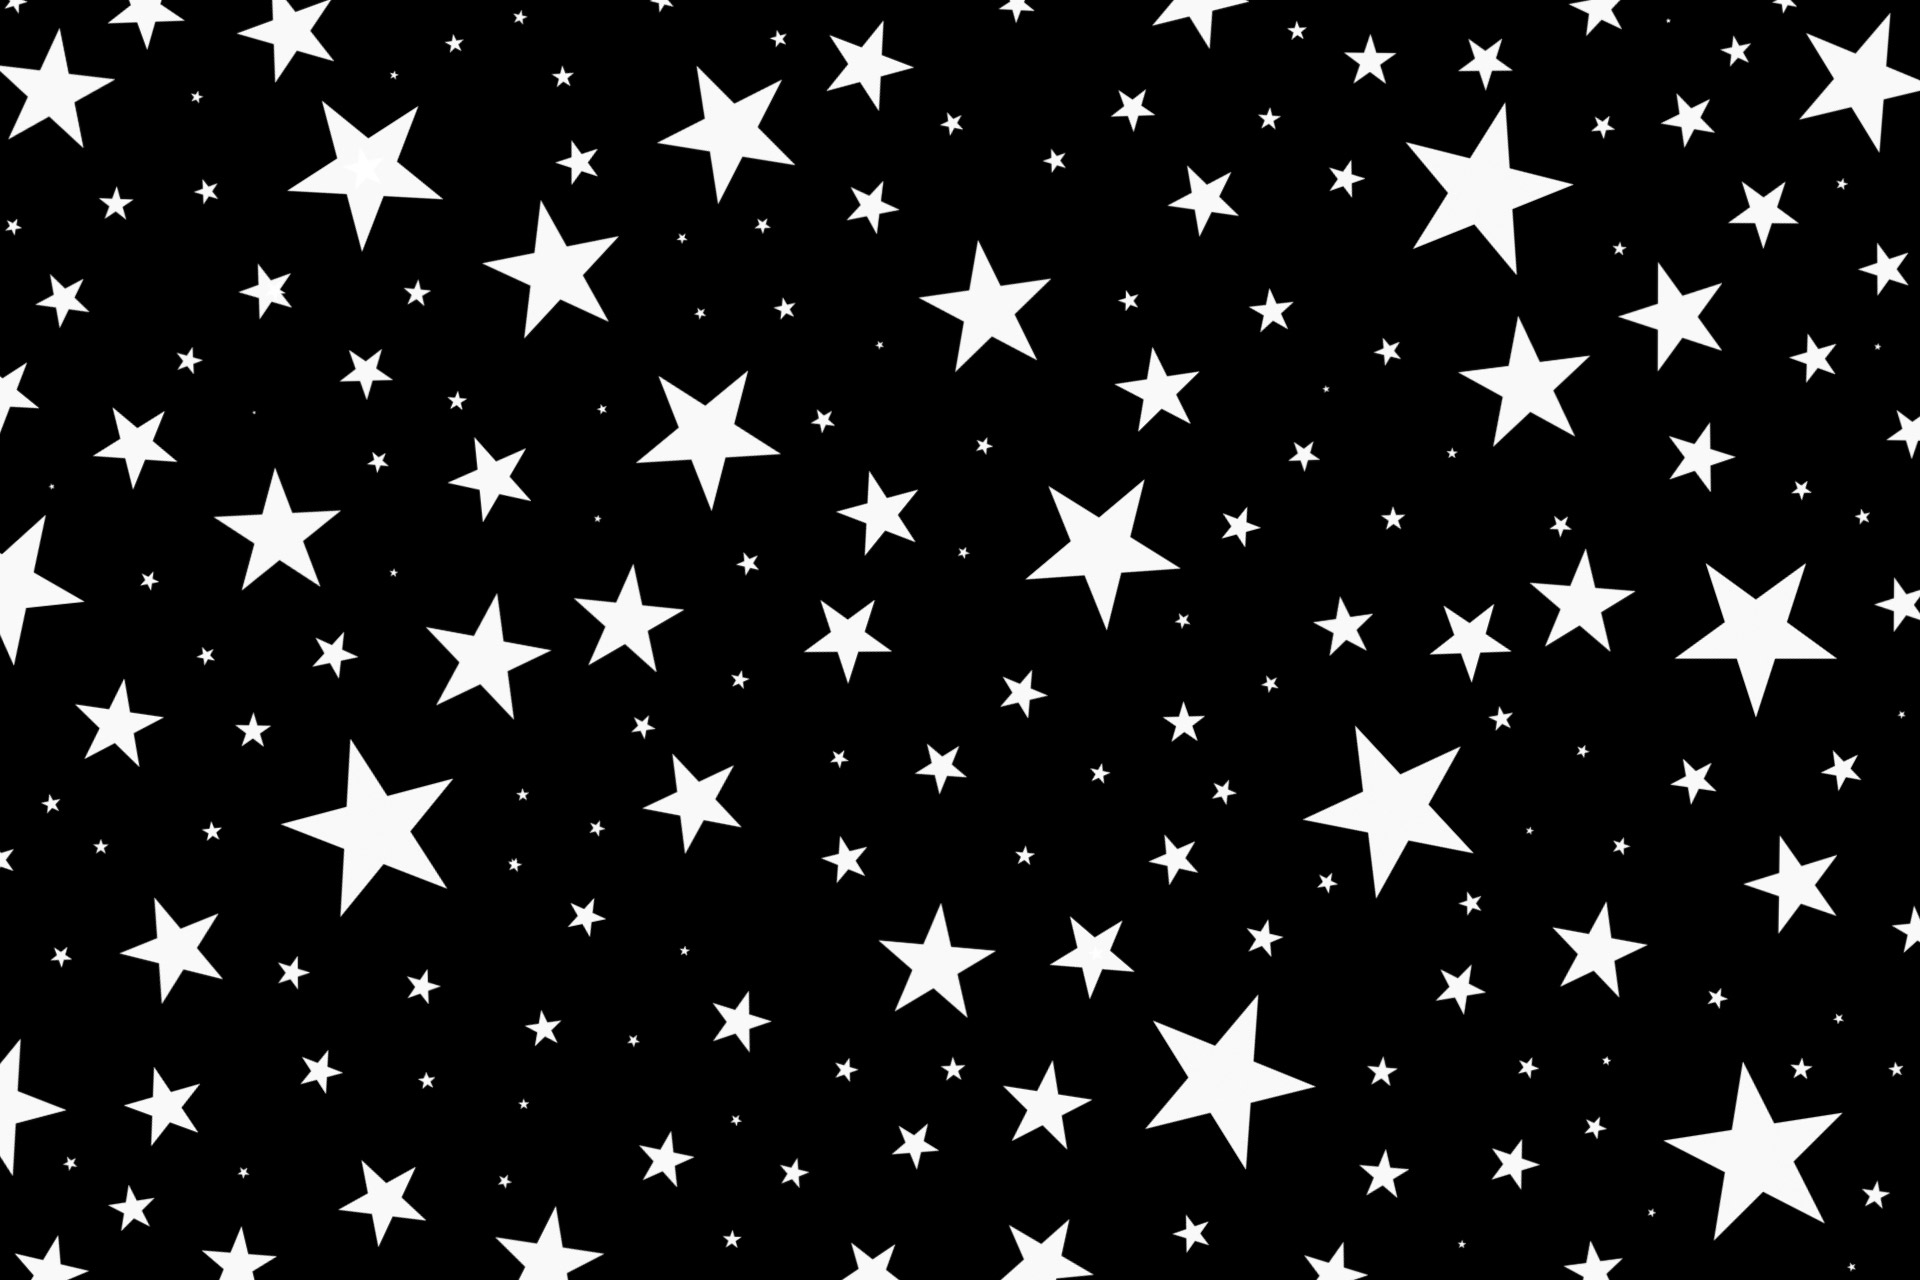 star wallpaper with black background for desktop